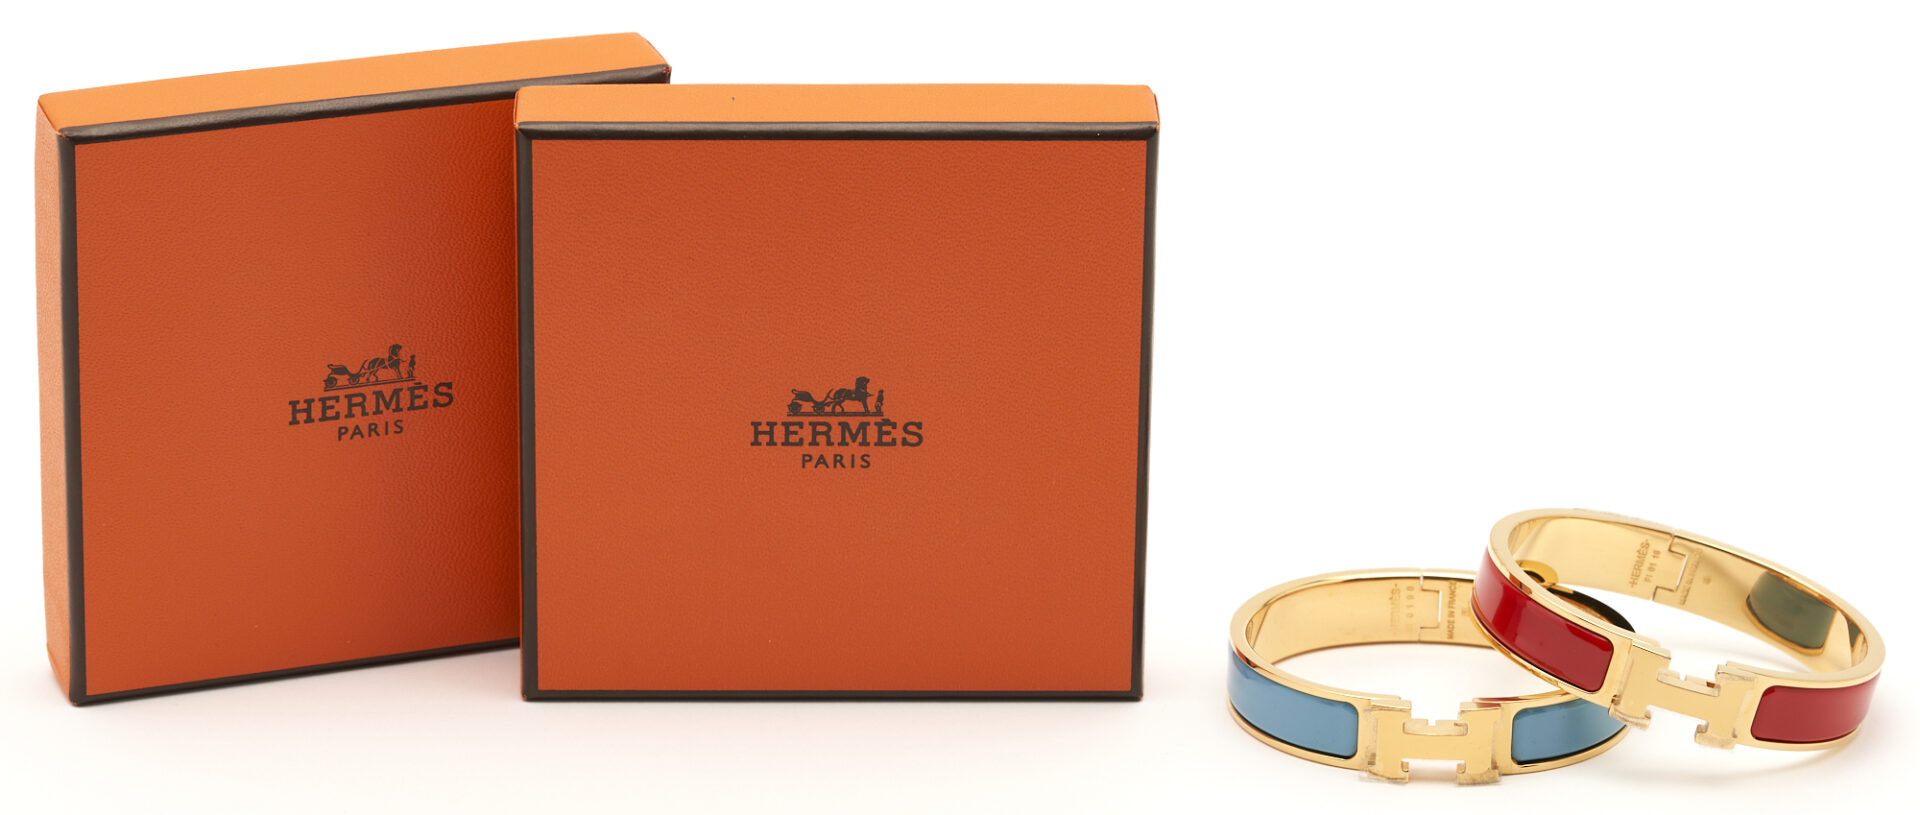 Lot 772: 2 Hermes Thin Enamel Bangles & 2 Clic H bracelets, 4 total items